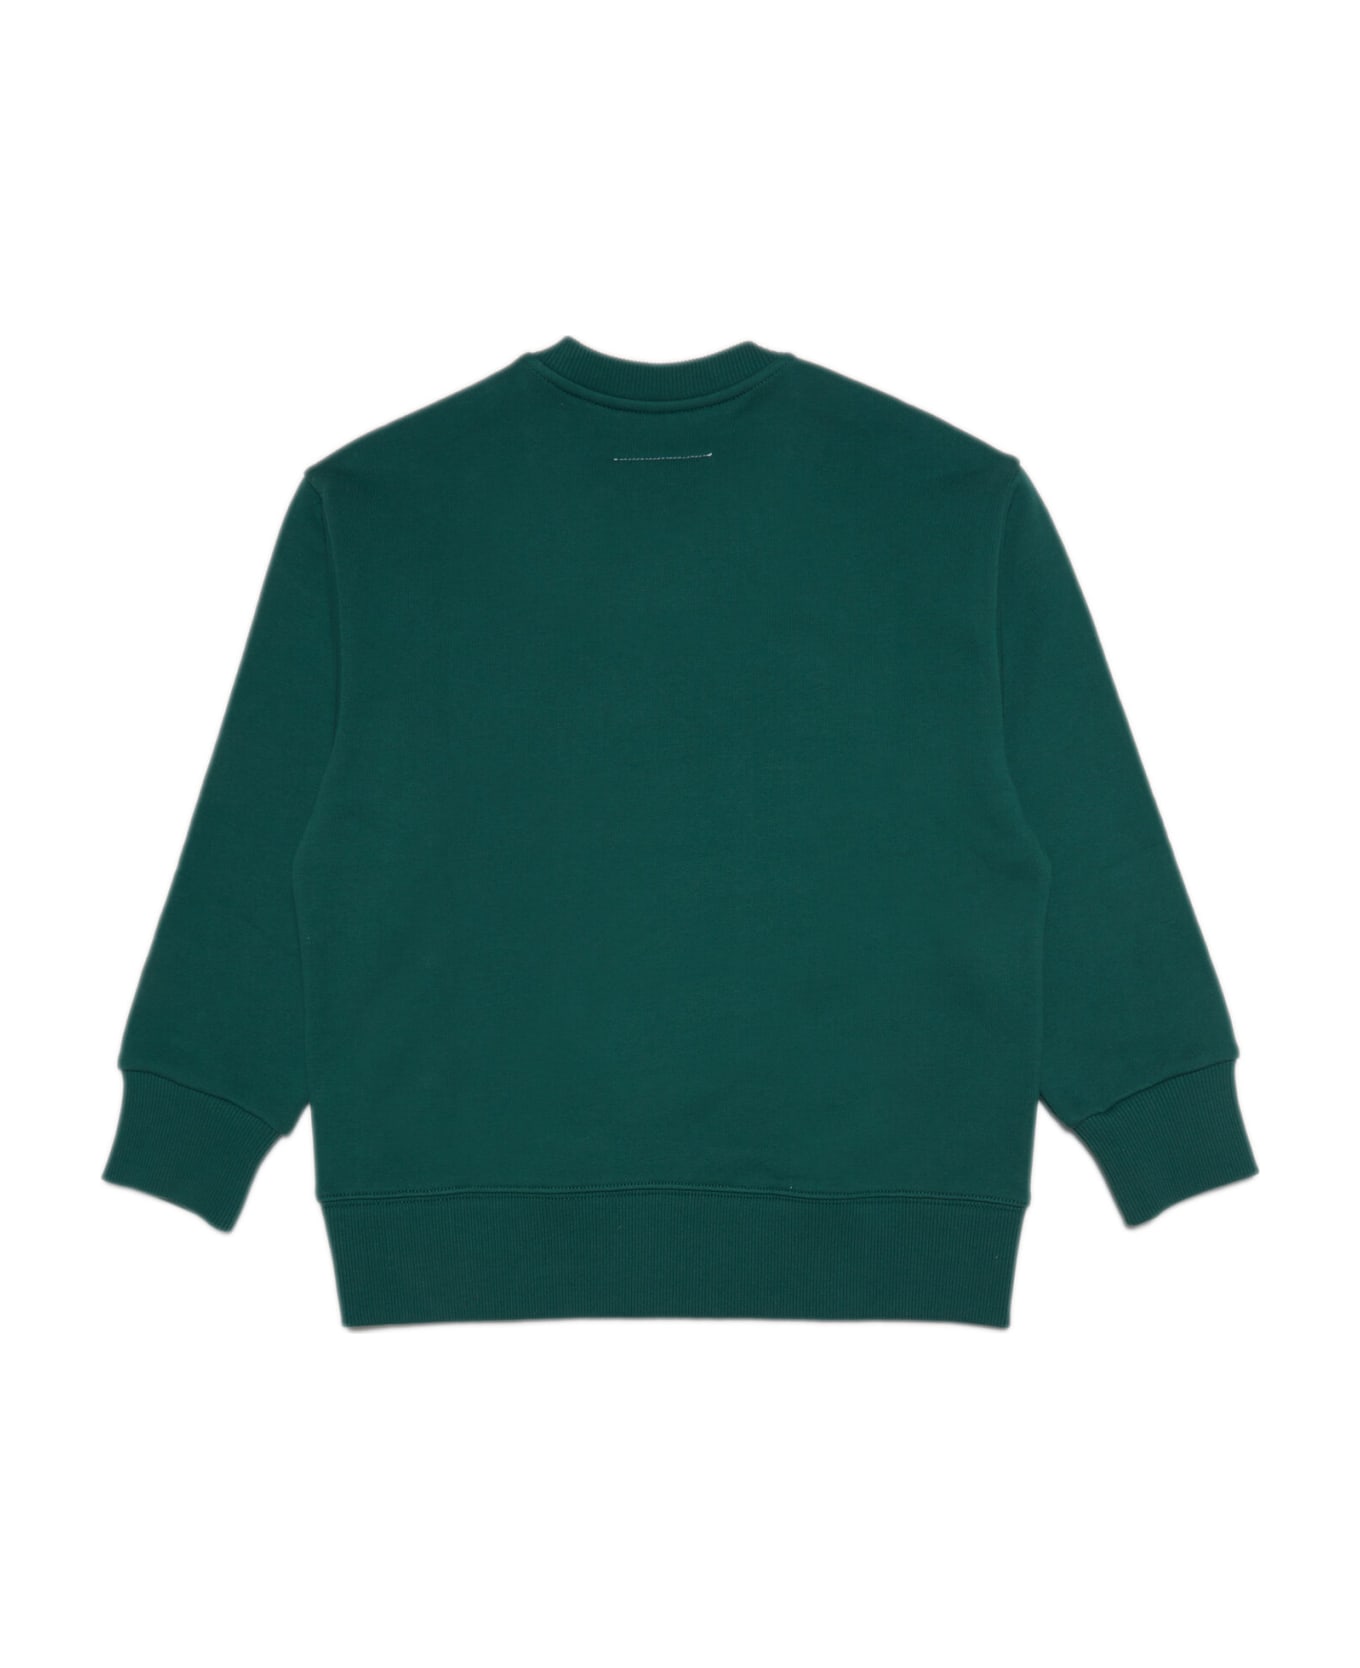 MM6 Maison Margiela Mm6s50u Sweat-shirt Maison Margiela Green Cotton Crewneck Sweatshirt With Thick Logo - Forest green